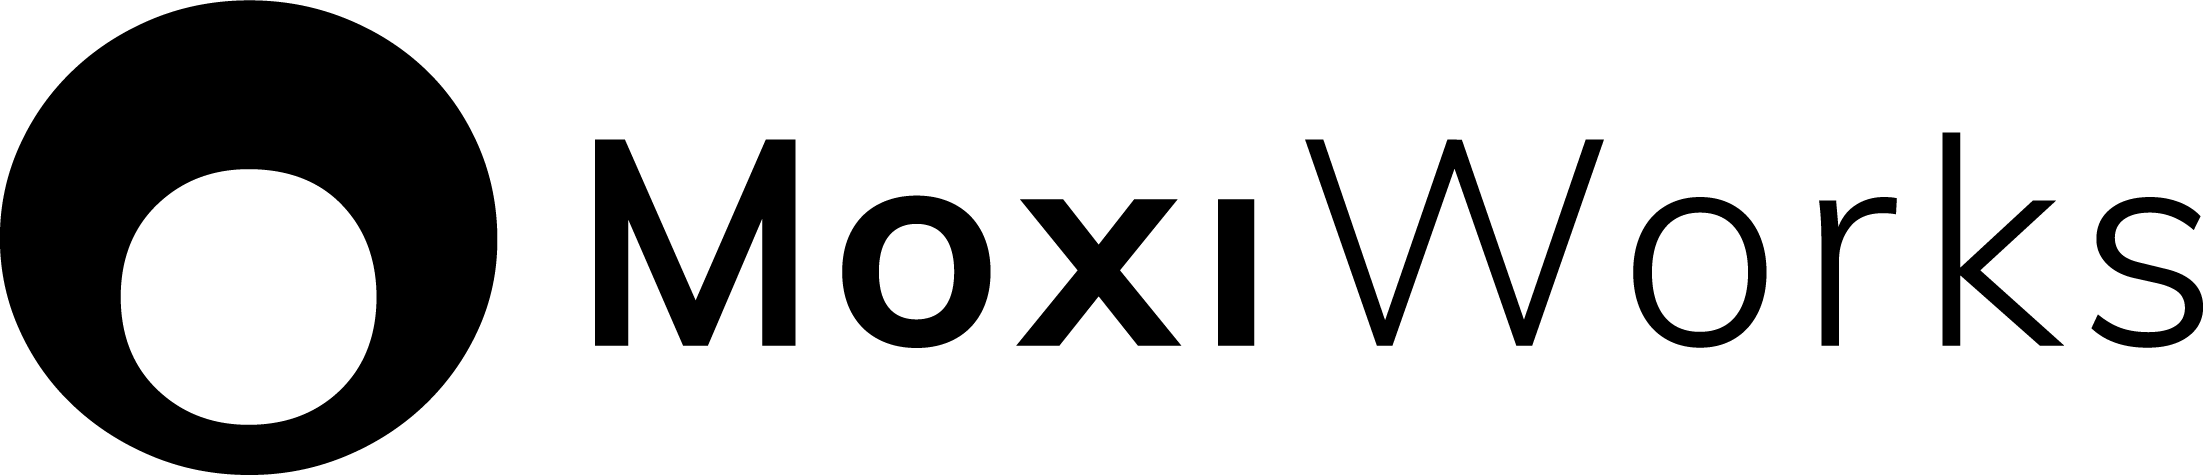 MoxiWorks Logo Black